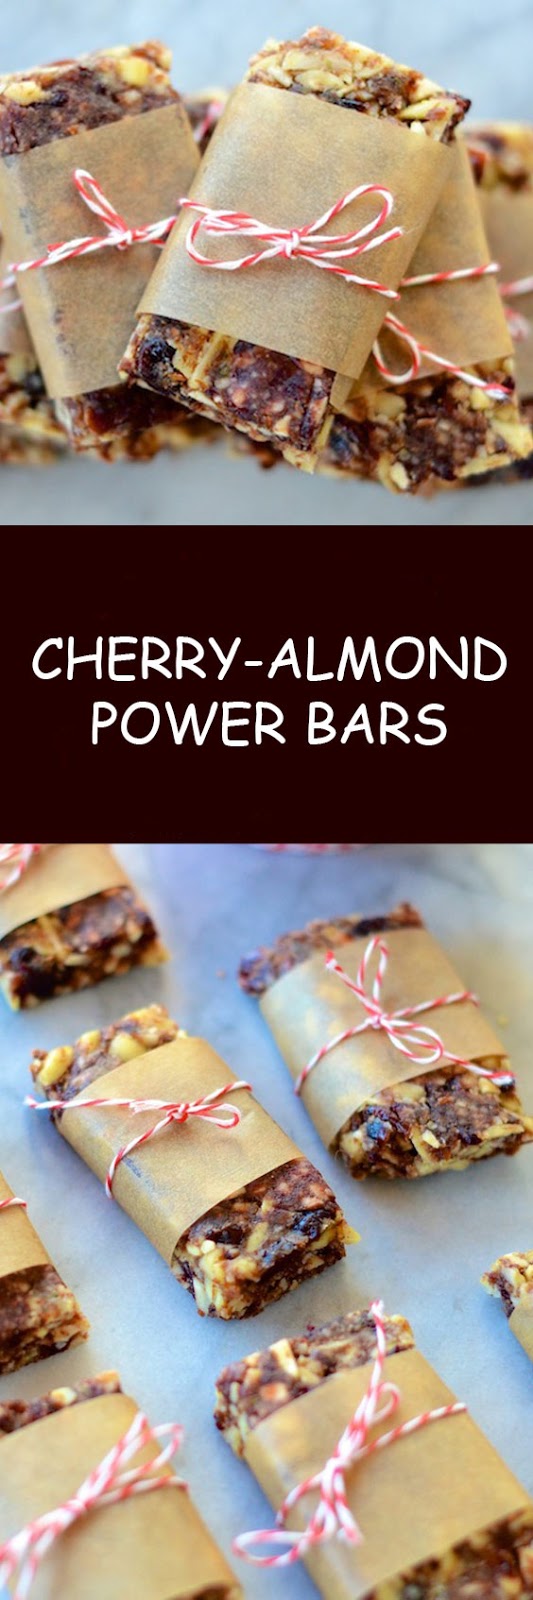 Cherry-Almond Power Bars Recipe